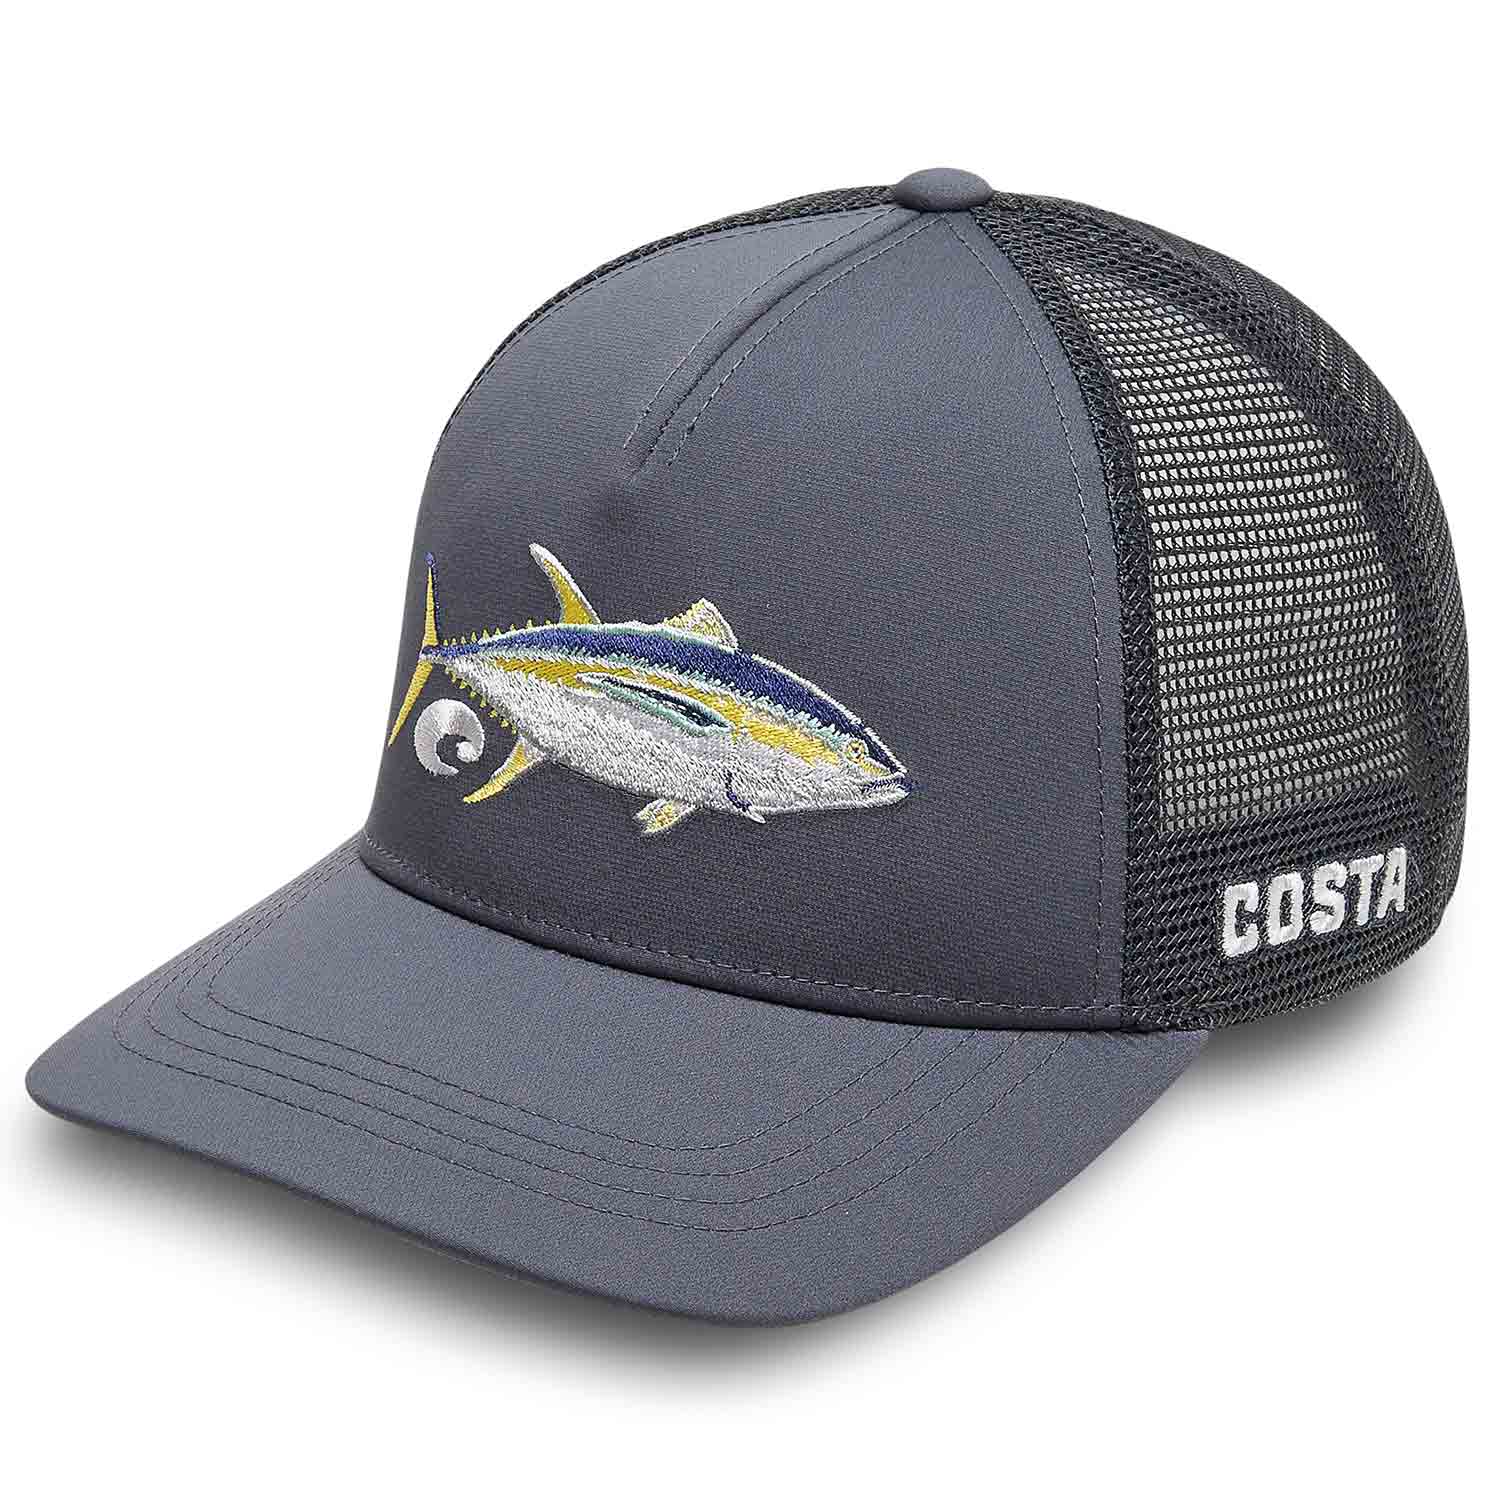 COSTA Stitched Trucker Tuna Trucker Hat